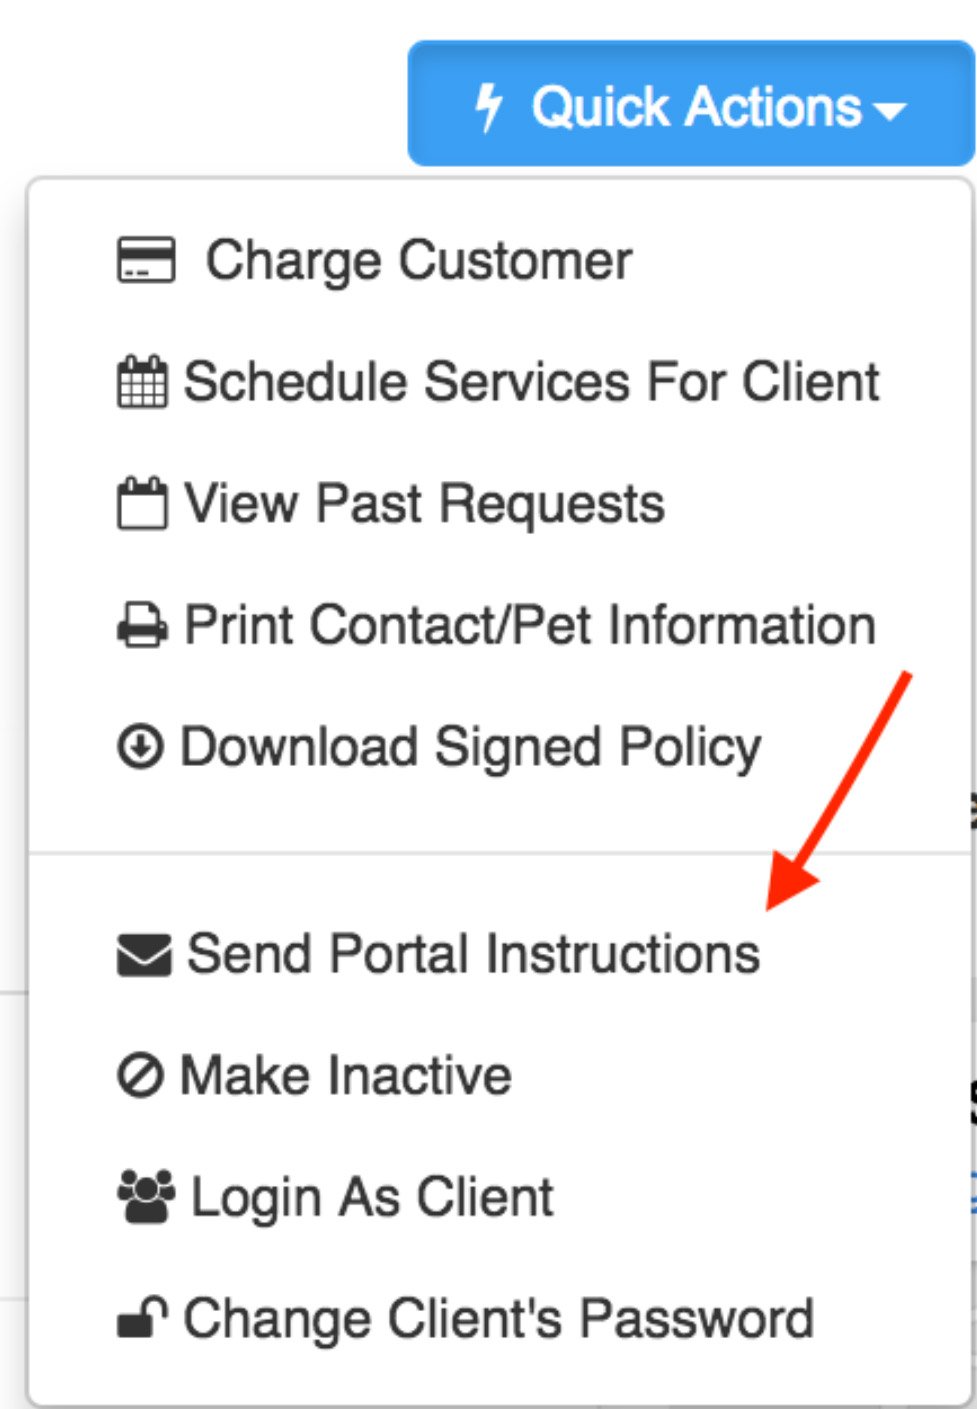 Sending Portal Instructions To Clients